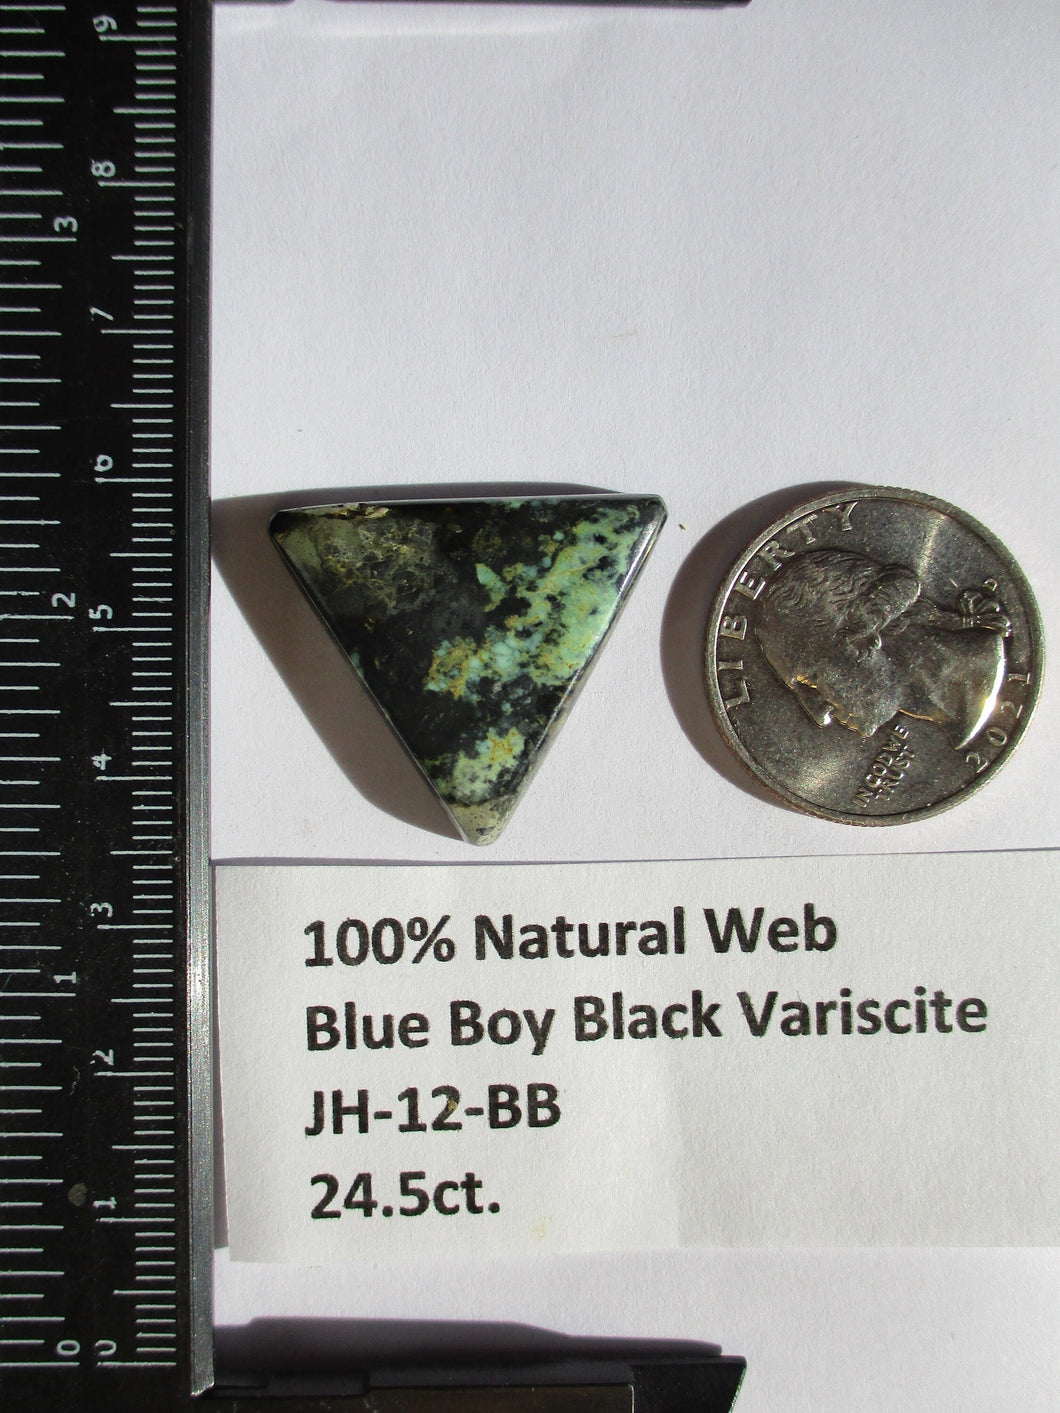 24.5 ct. (23x13.5x5.5 mm) Natural Blue Boy Black Variscite Cabochon Gemstone, # JH 12